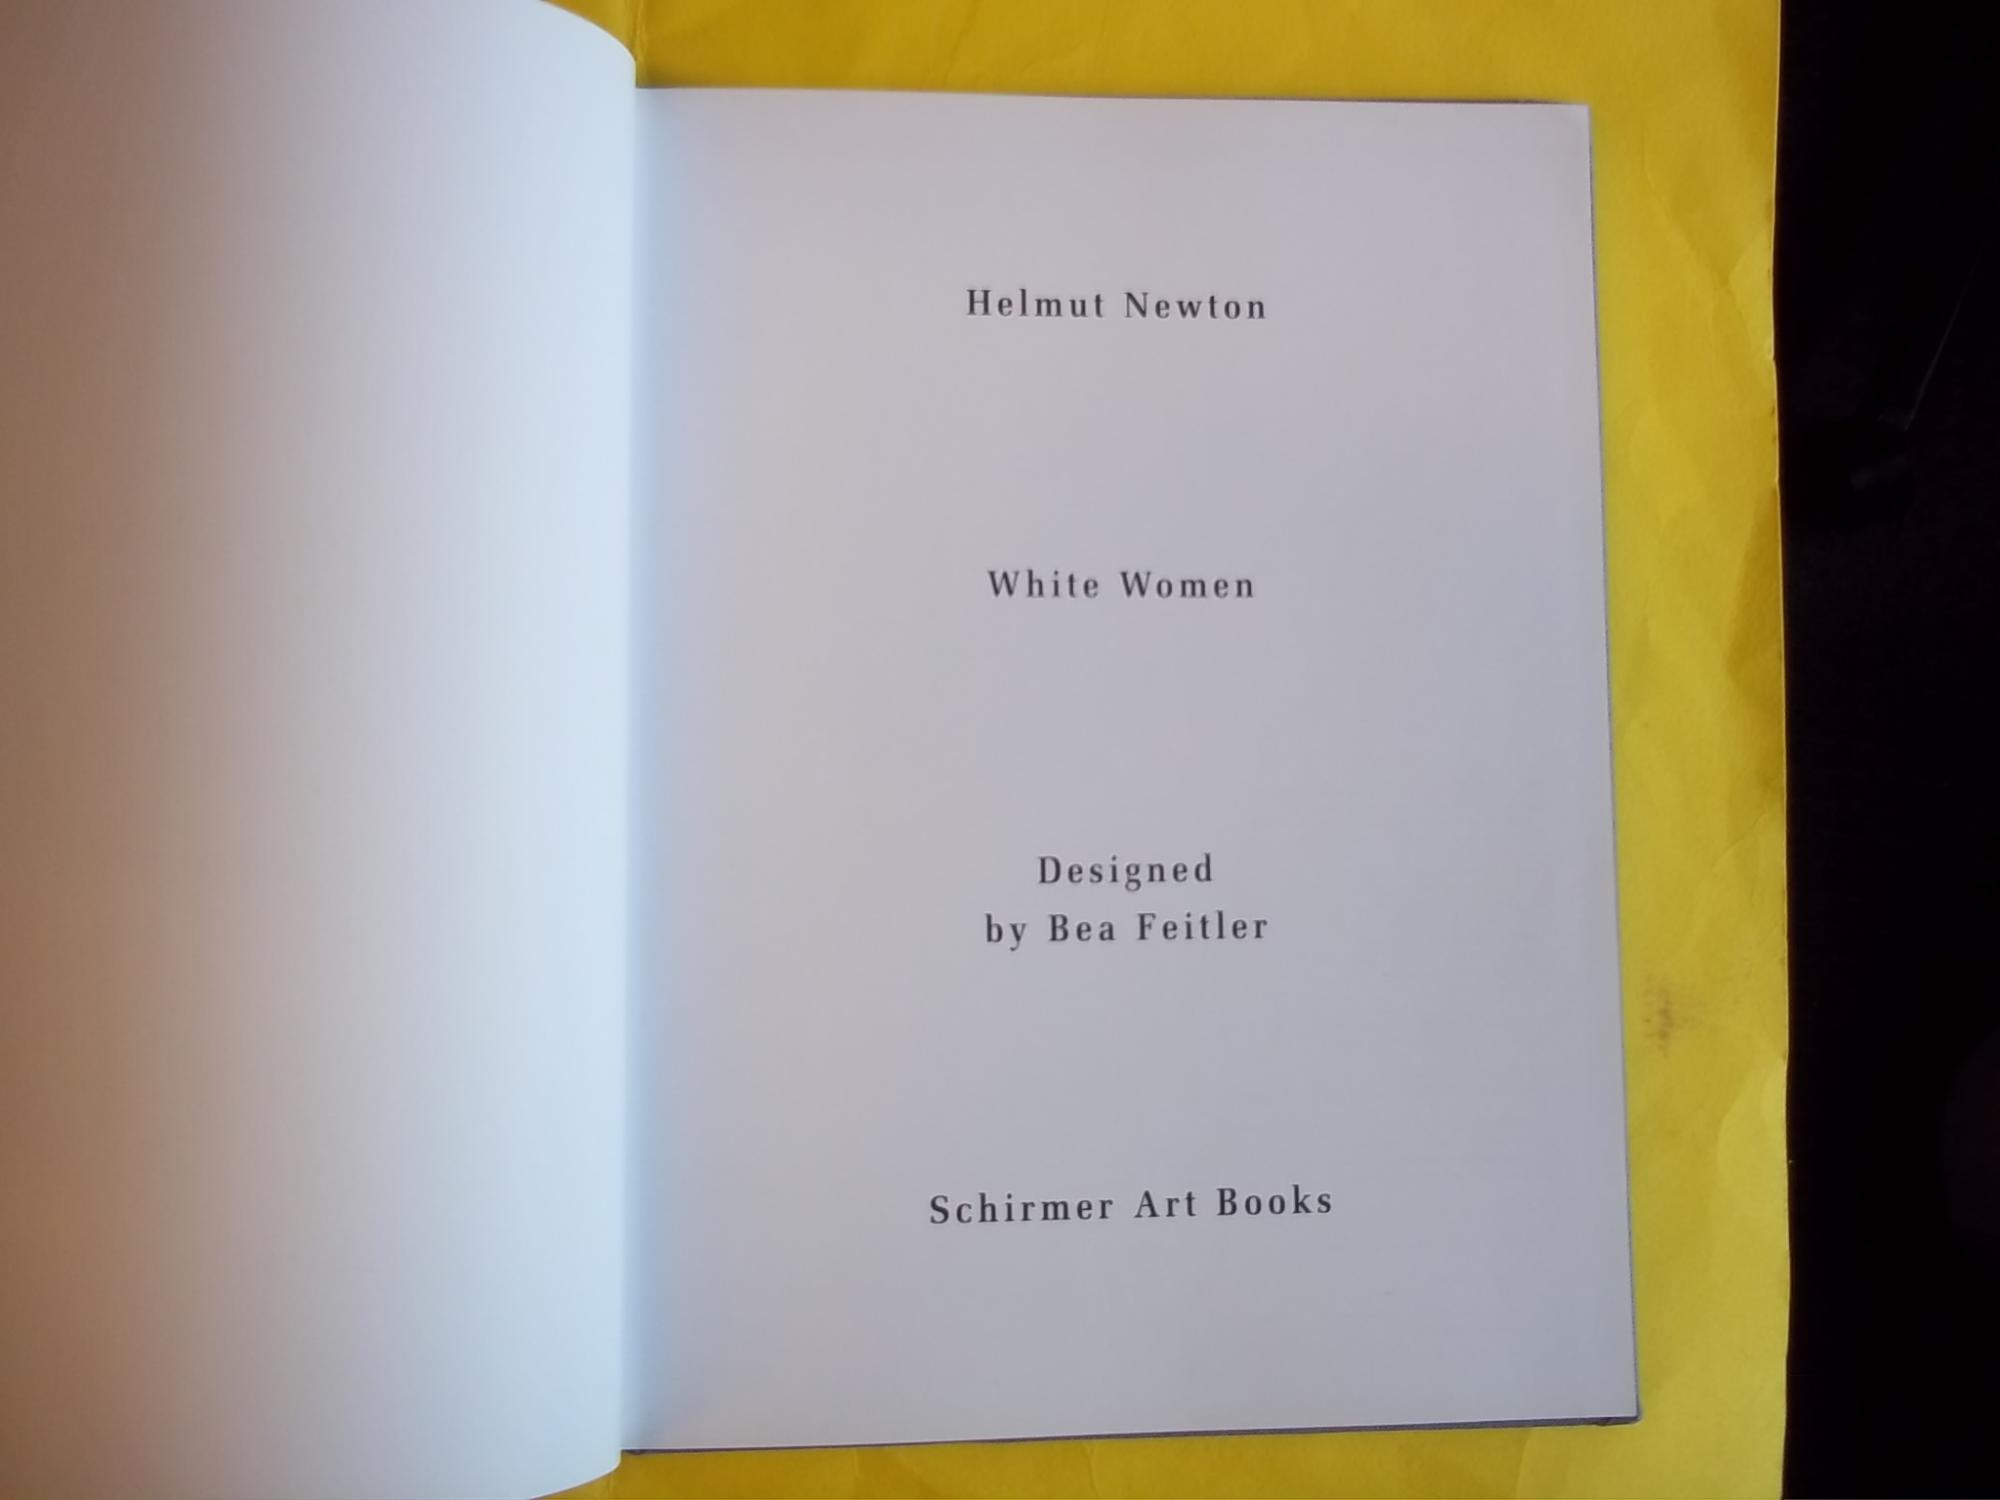 White Women (Schirmer art books on art, photography & erotics) - Helmut Newton